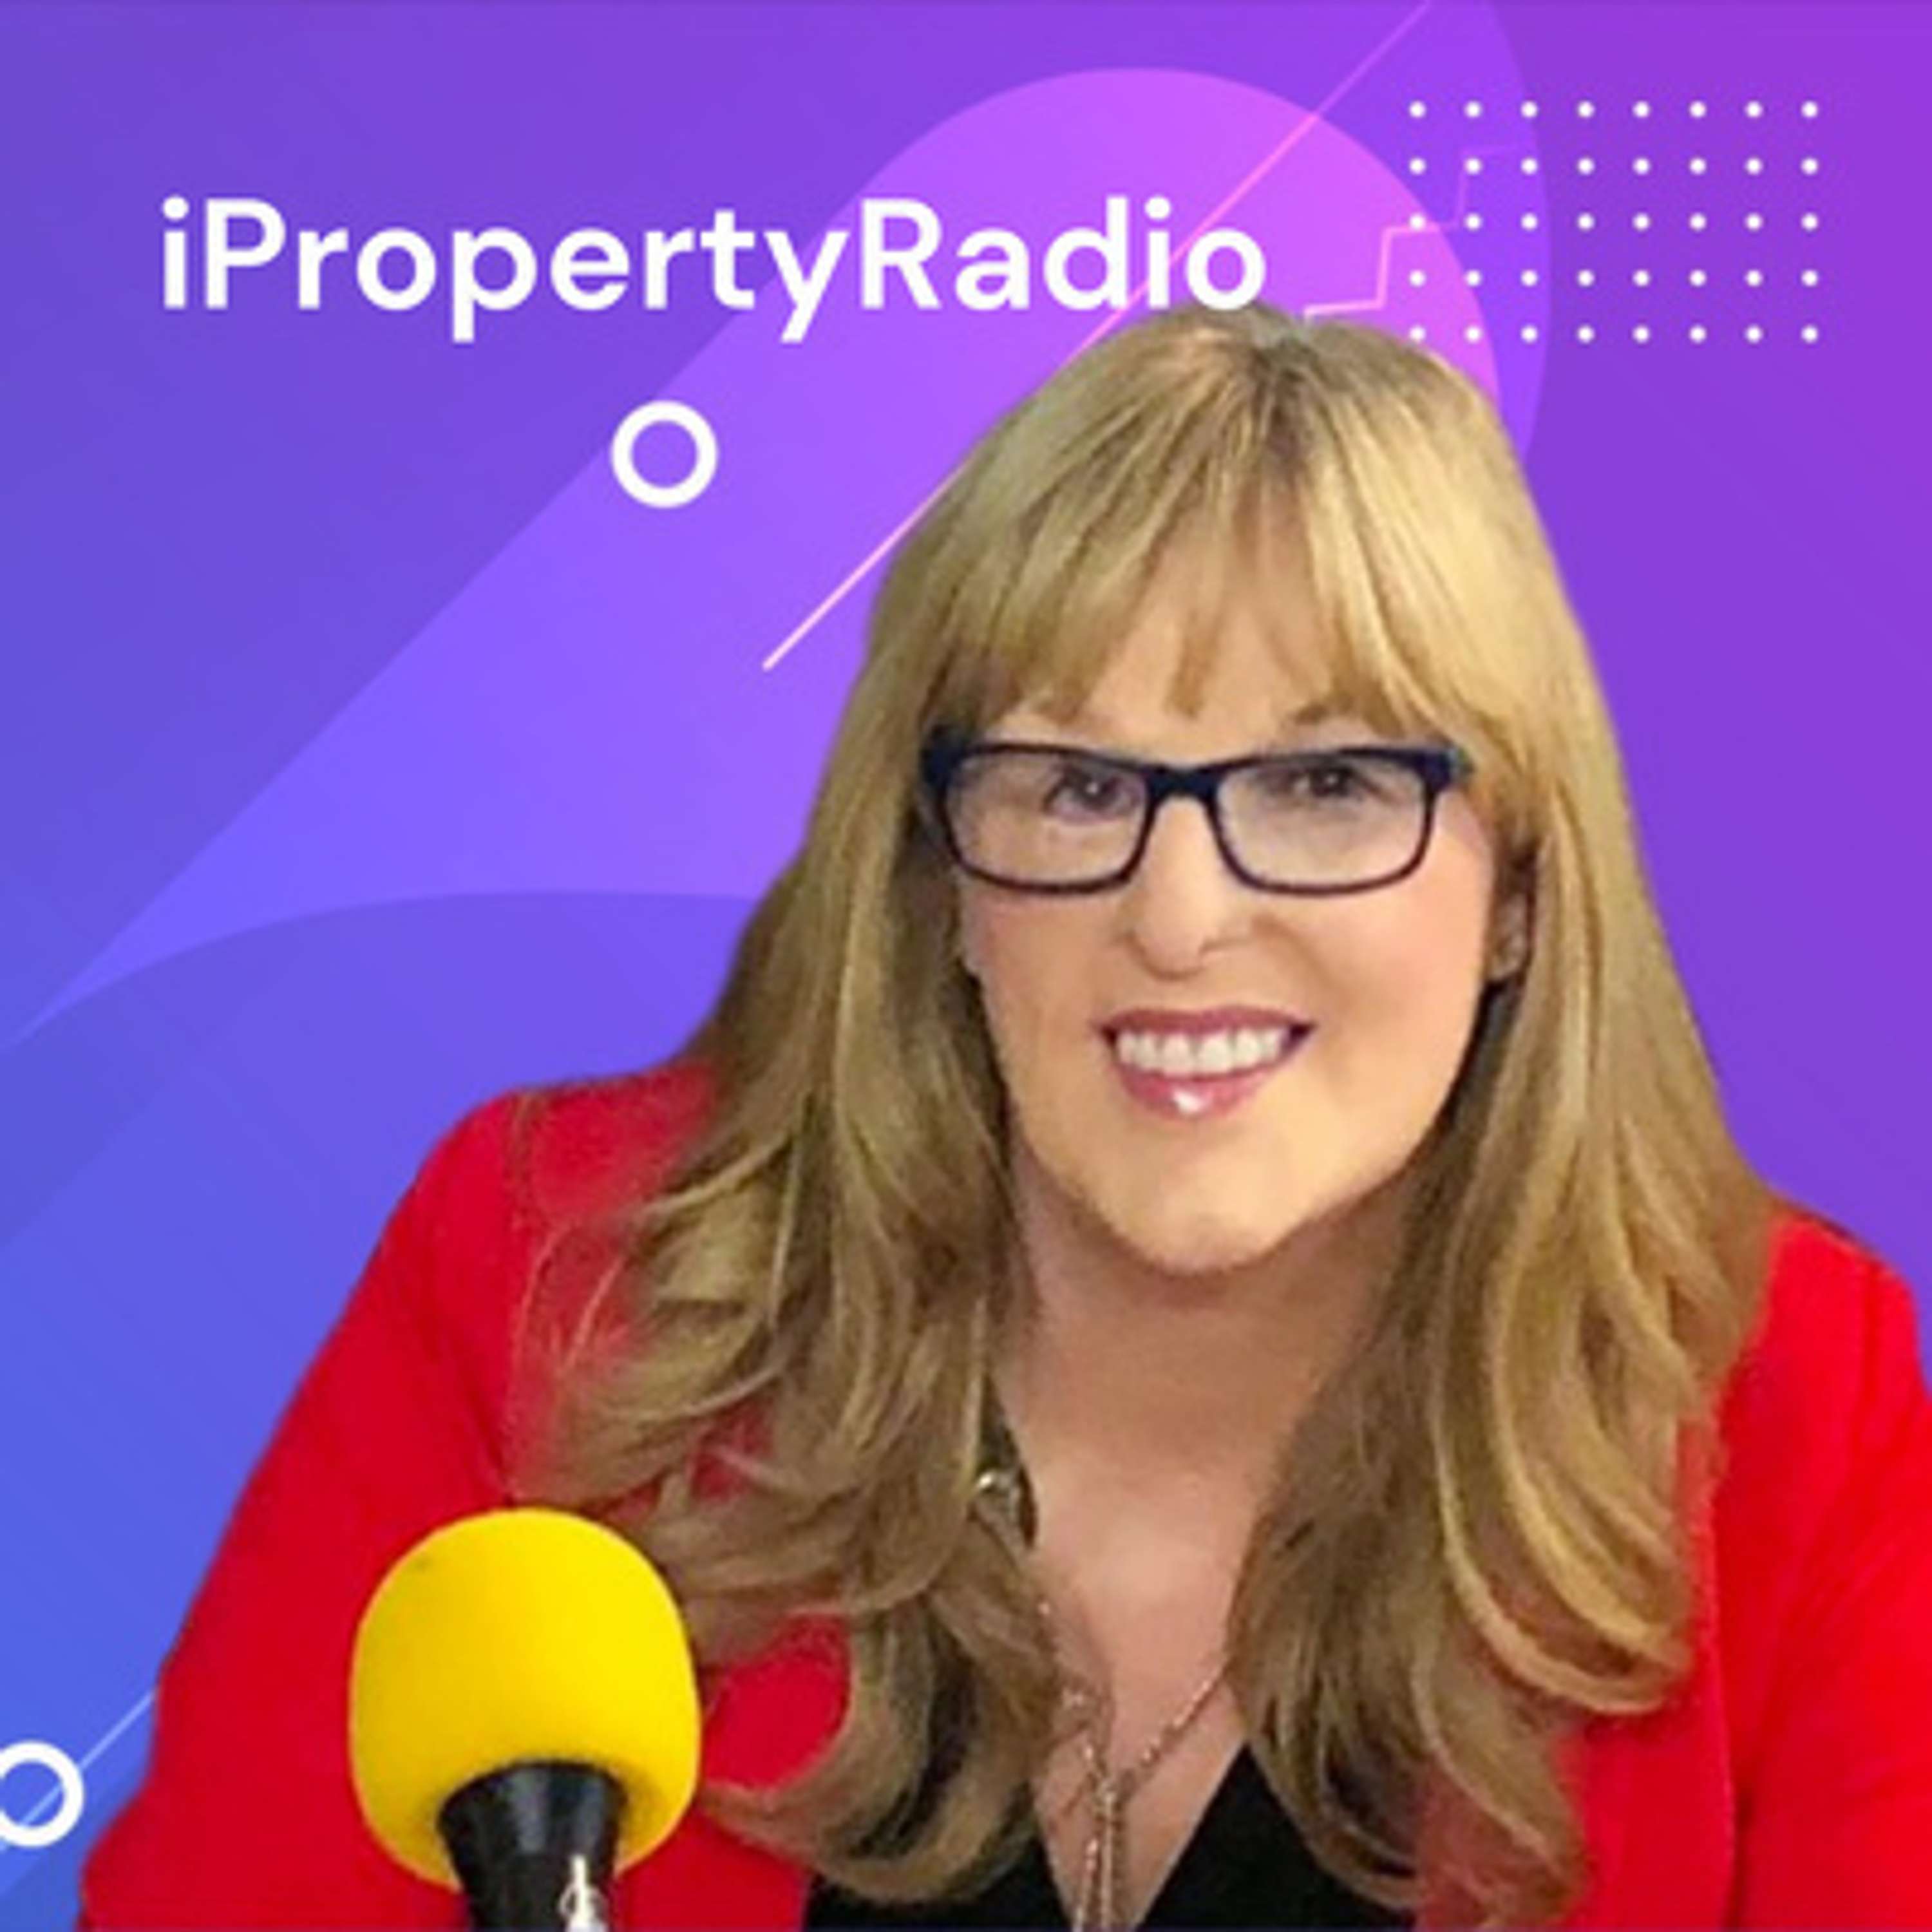 Ep.27 iPropertyRadio: Property Matters, July 30th, 2019